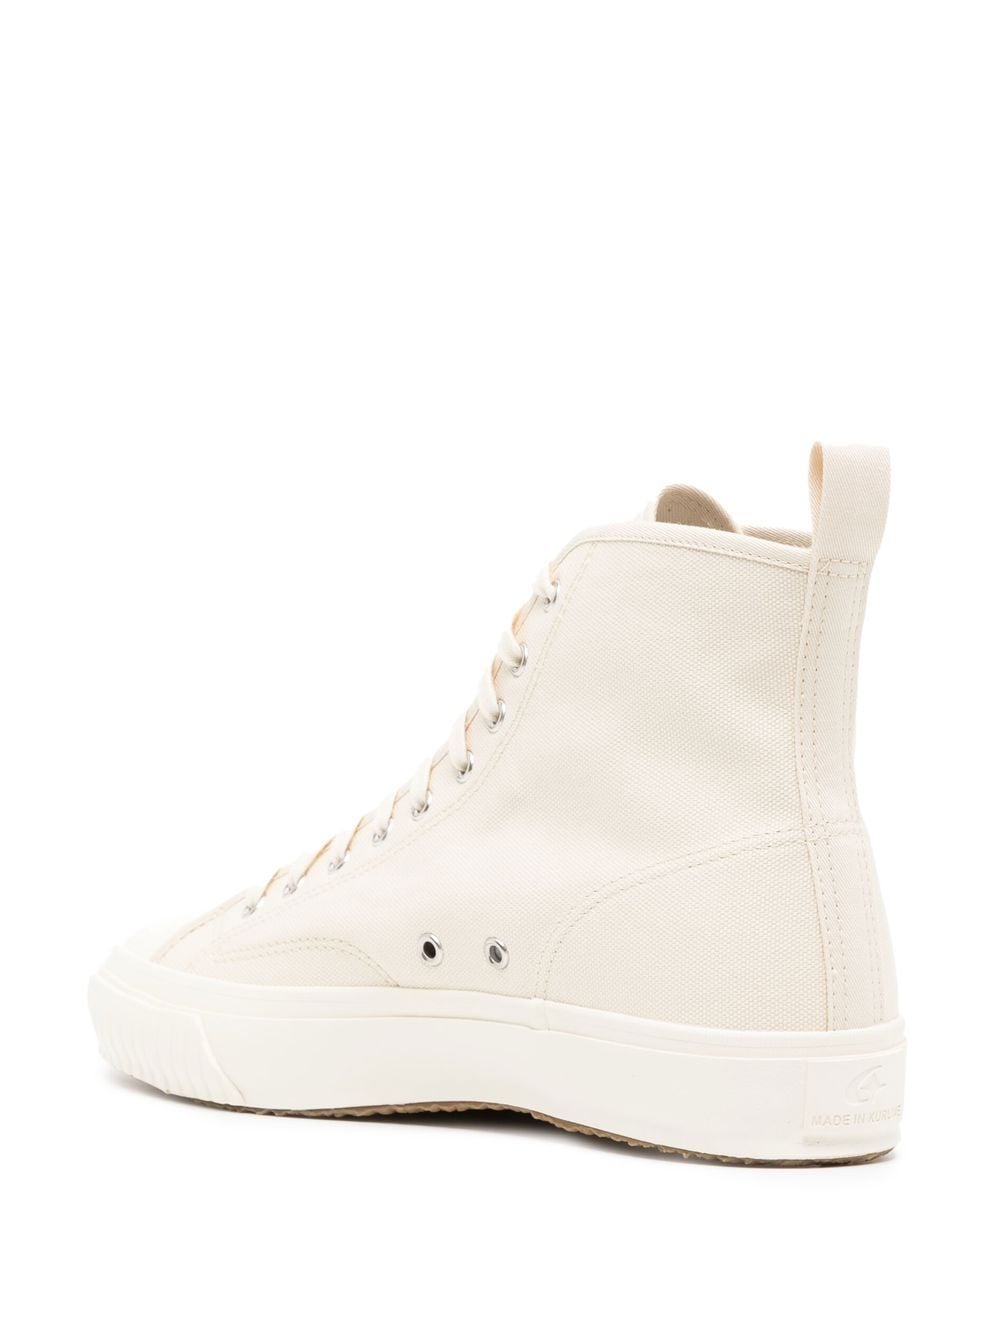 ymc x moonstar high-top sneakers - white